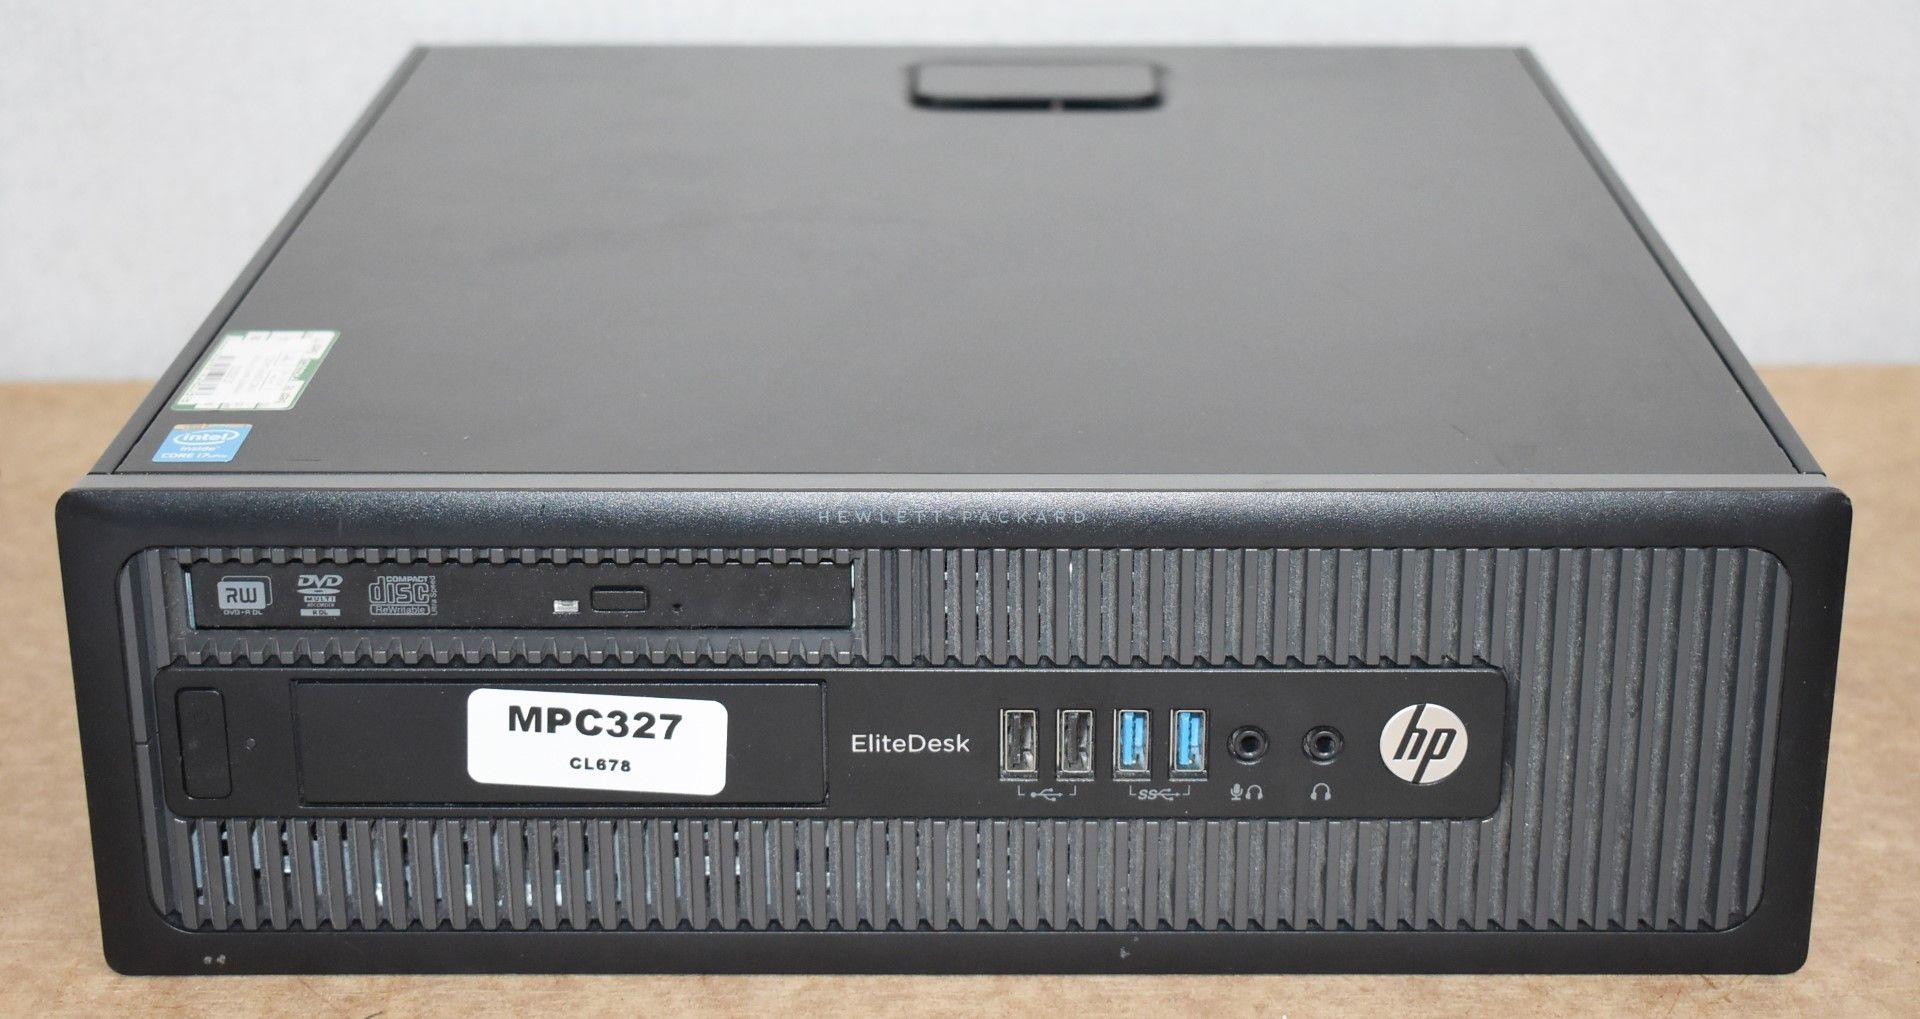 1 x HP Elite Desk 800 G1 SFF Desktop PC - Features an Intel i7-4770 3.4hz Quad Core Processor, 8gb